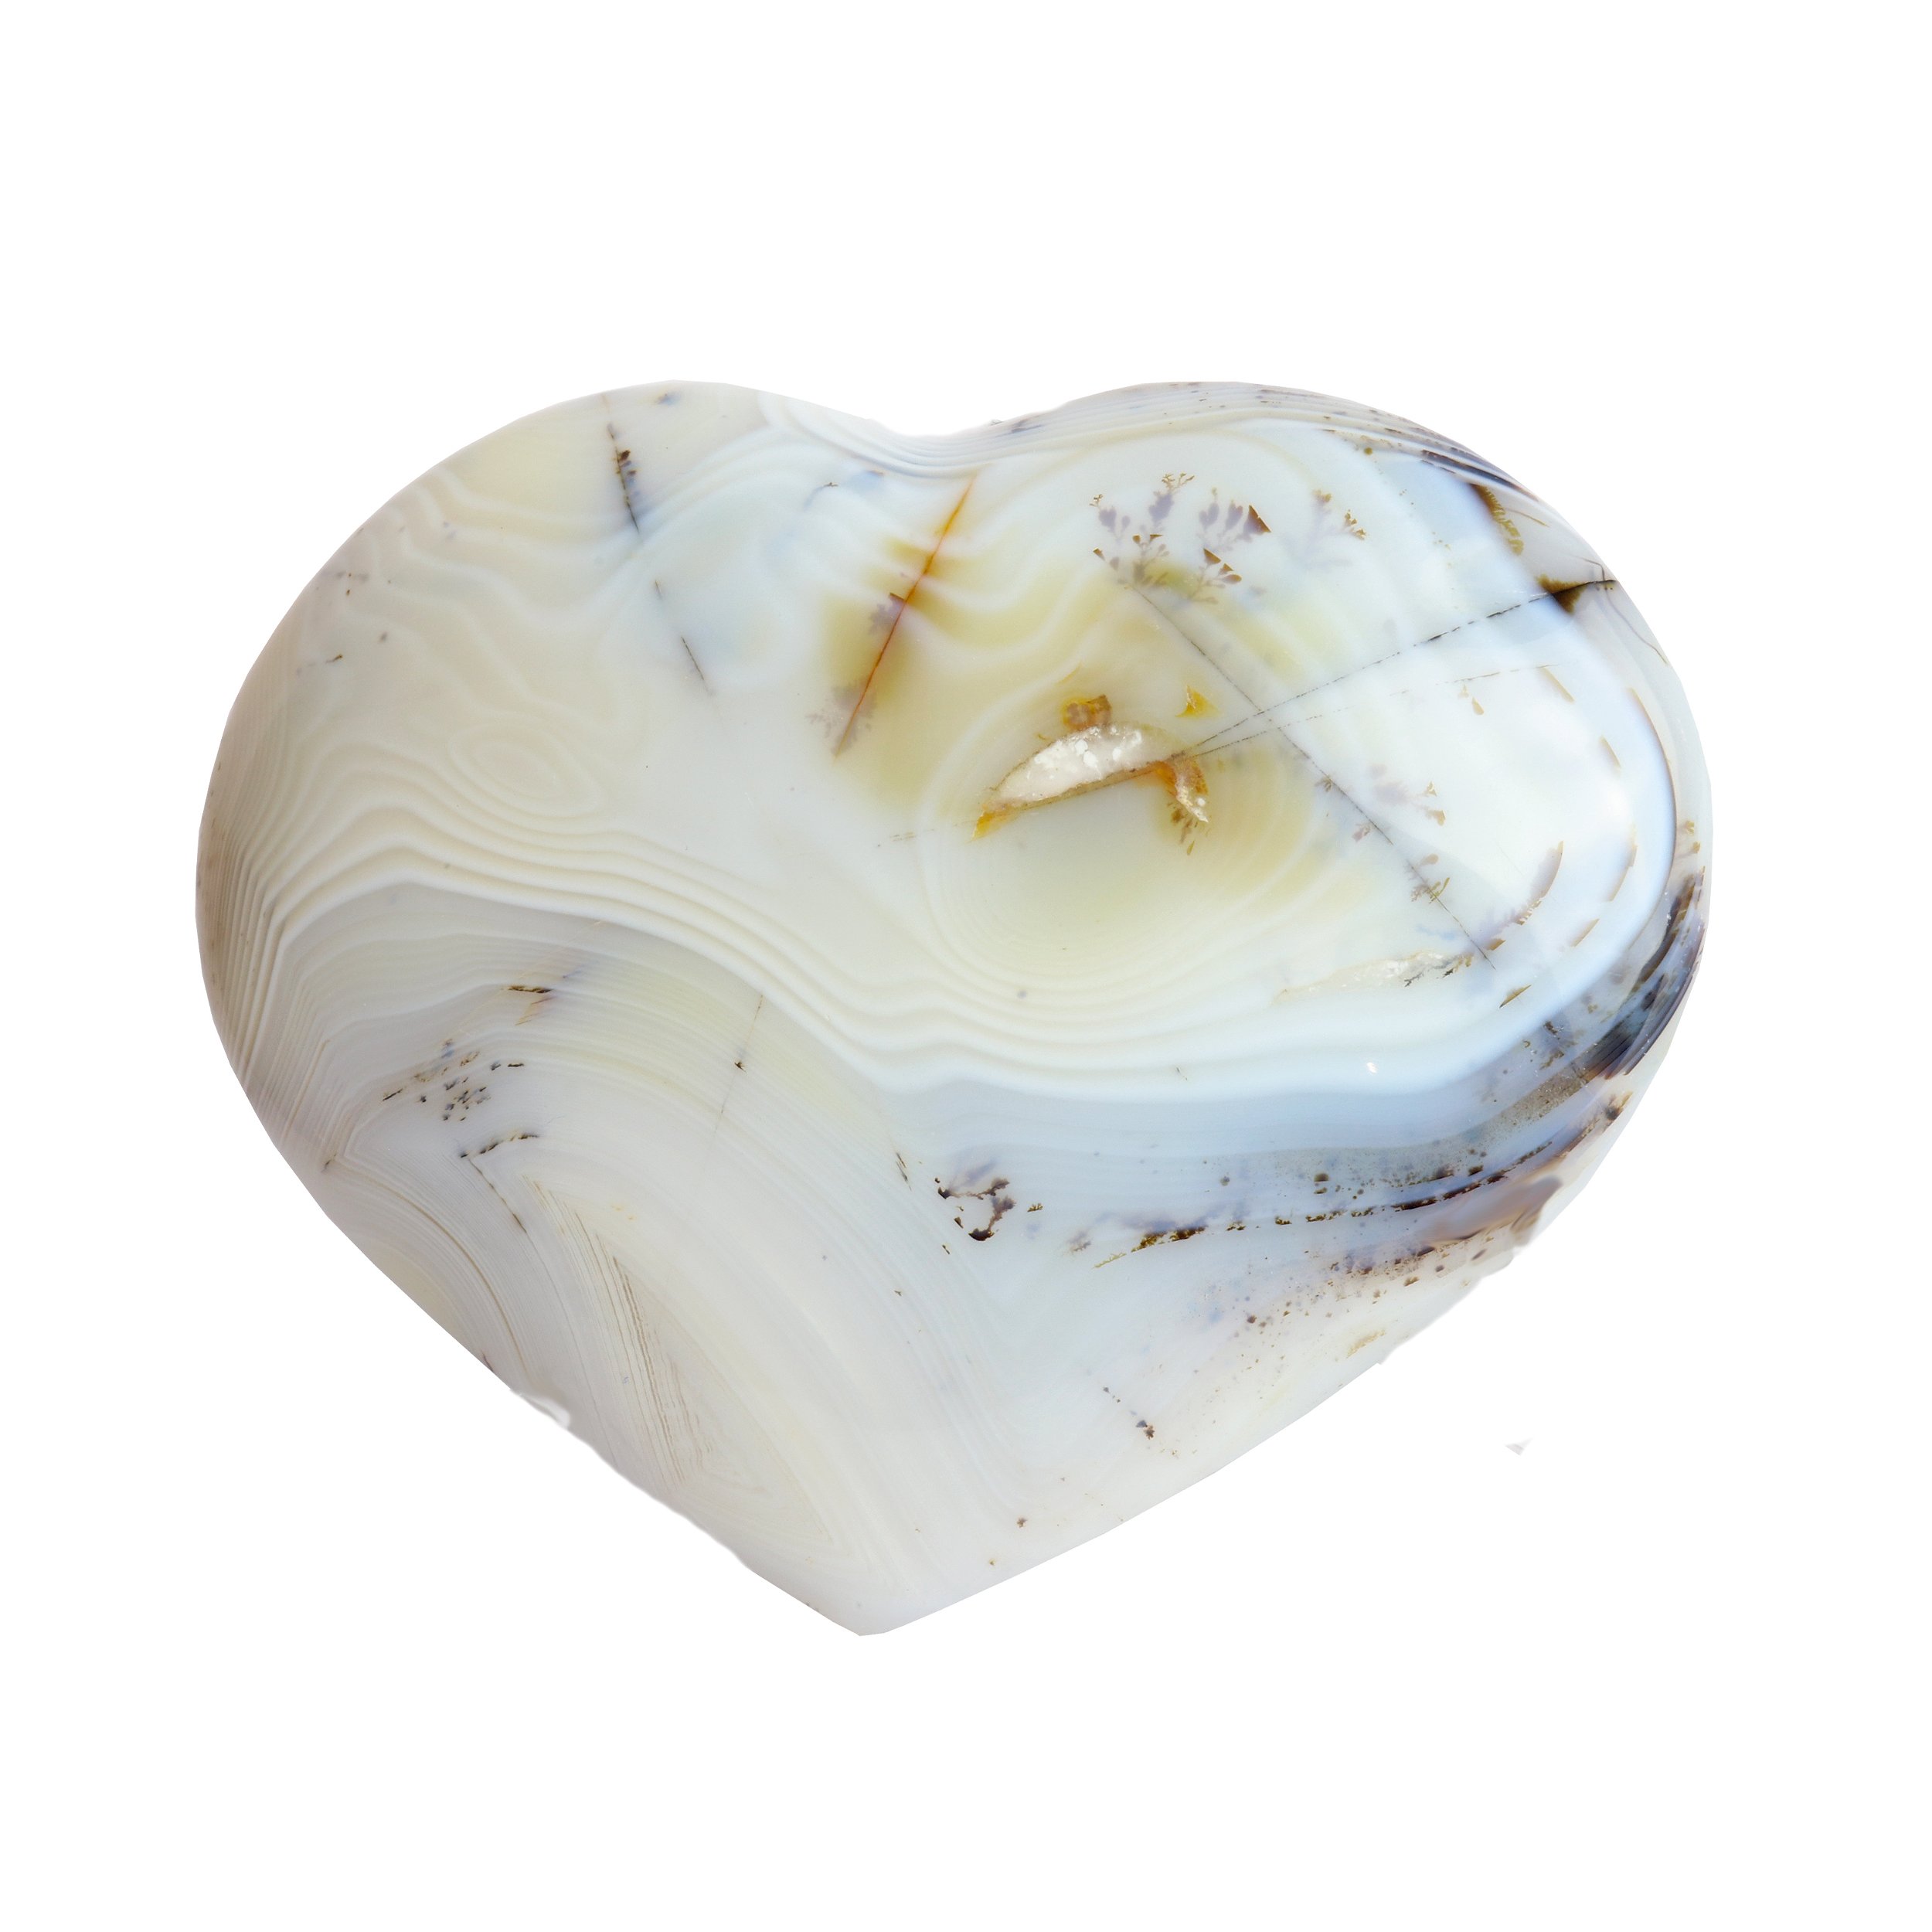 Dendritic Agate Heart - White Banding